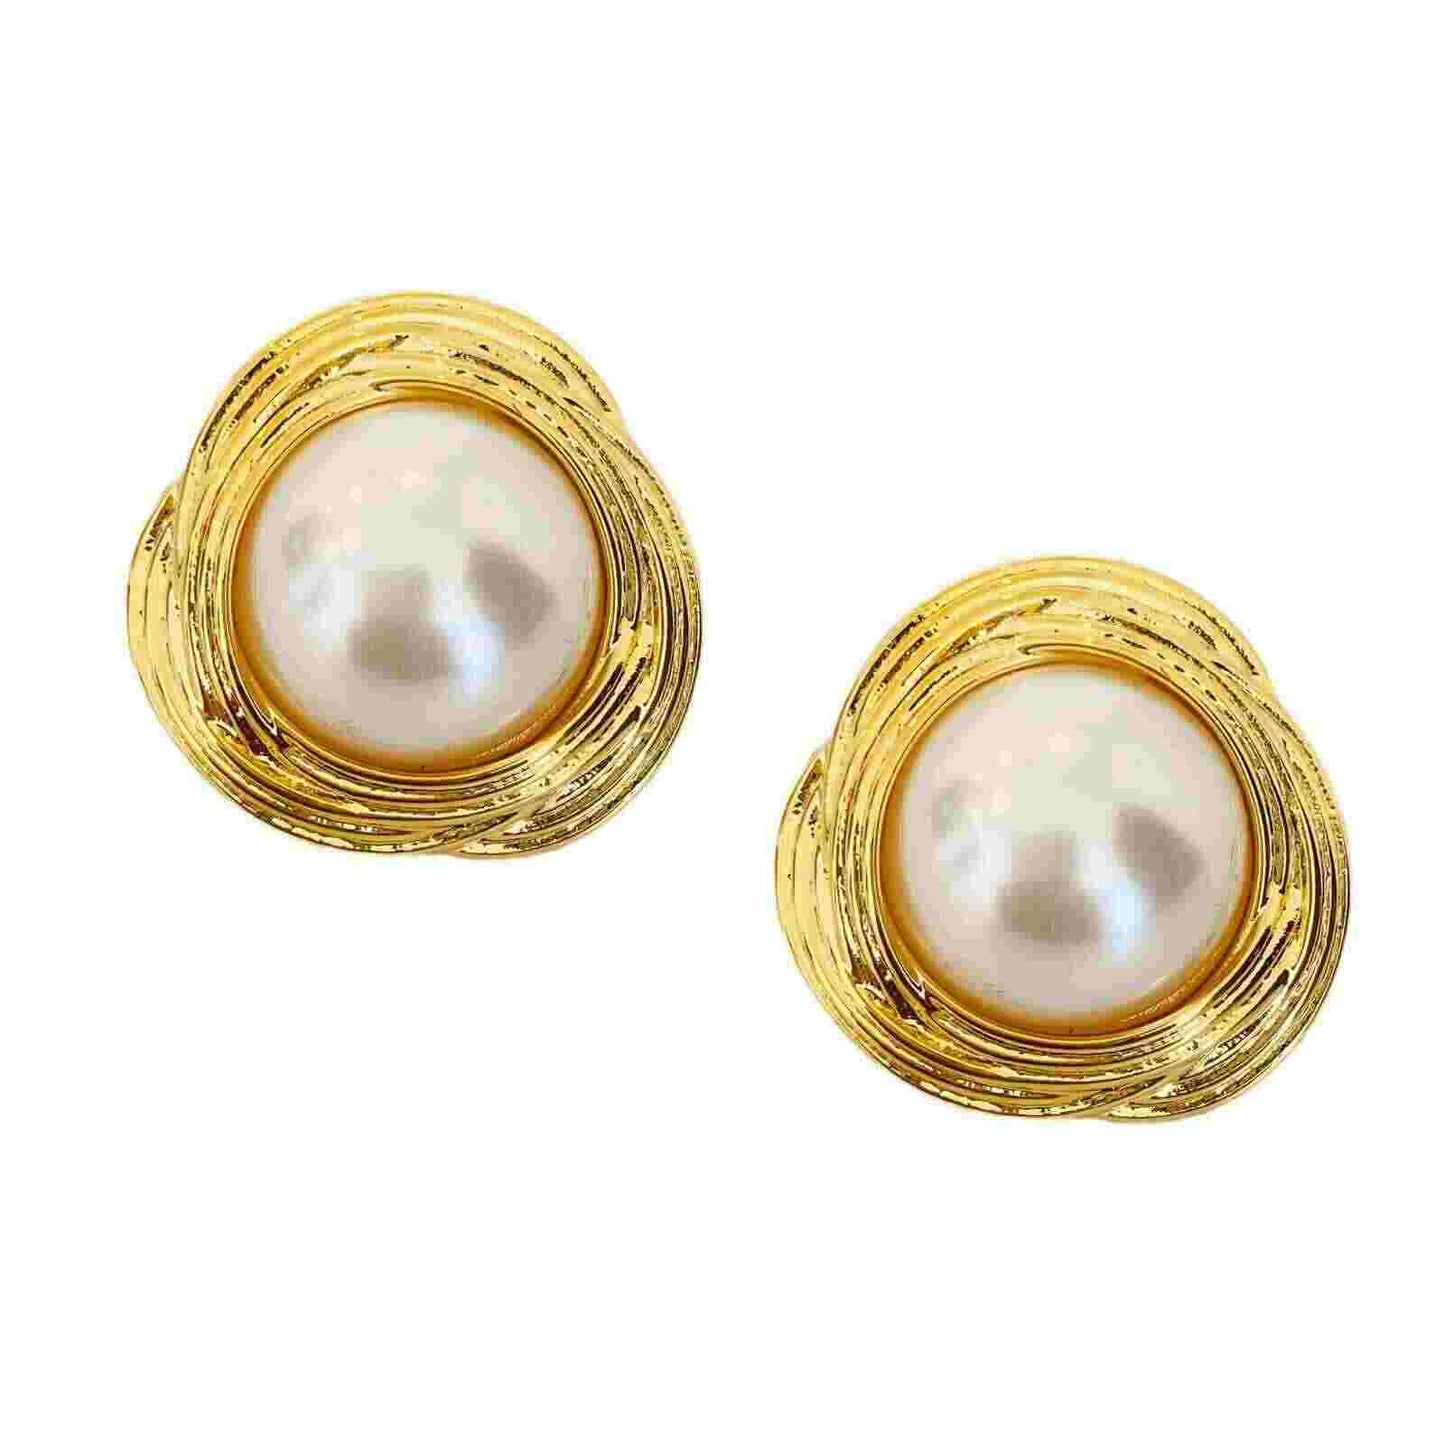 New Pearl Earrings | Latest Design | Premium Quality | Imitation Jewellery